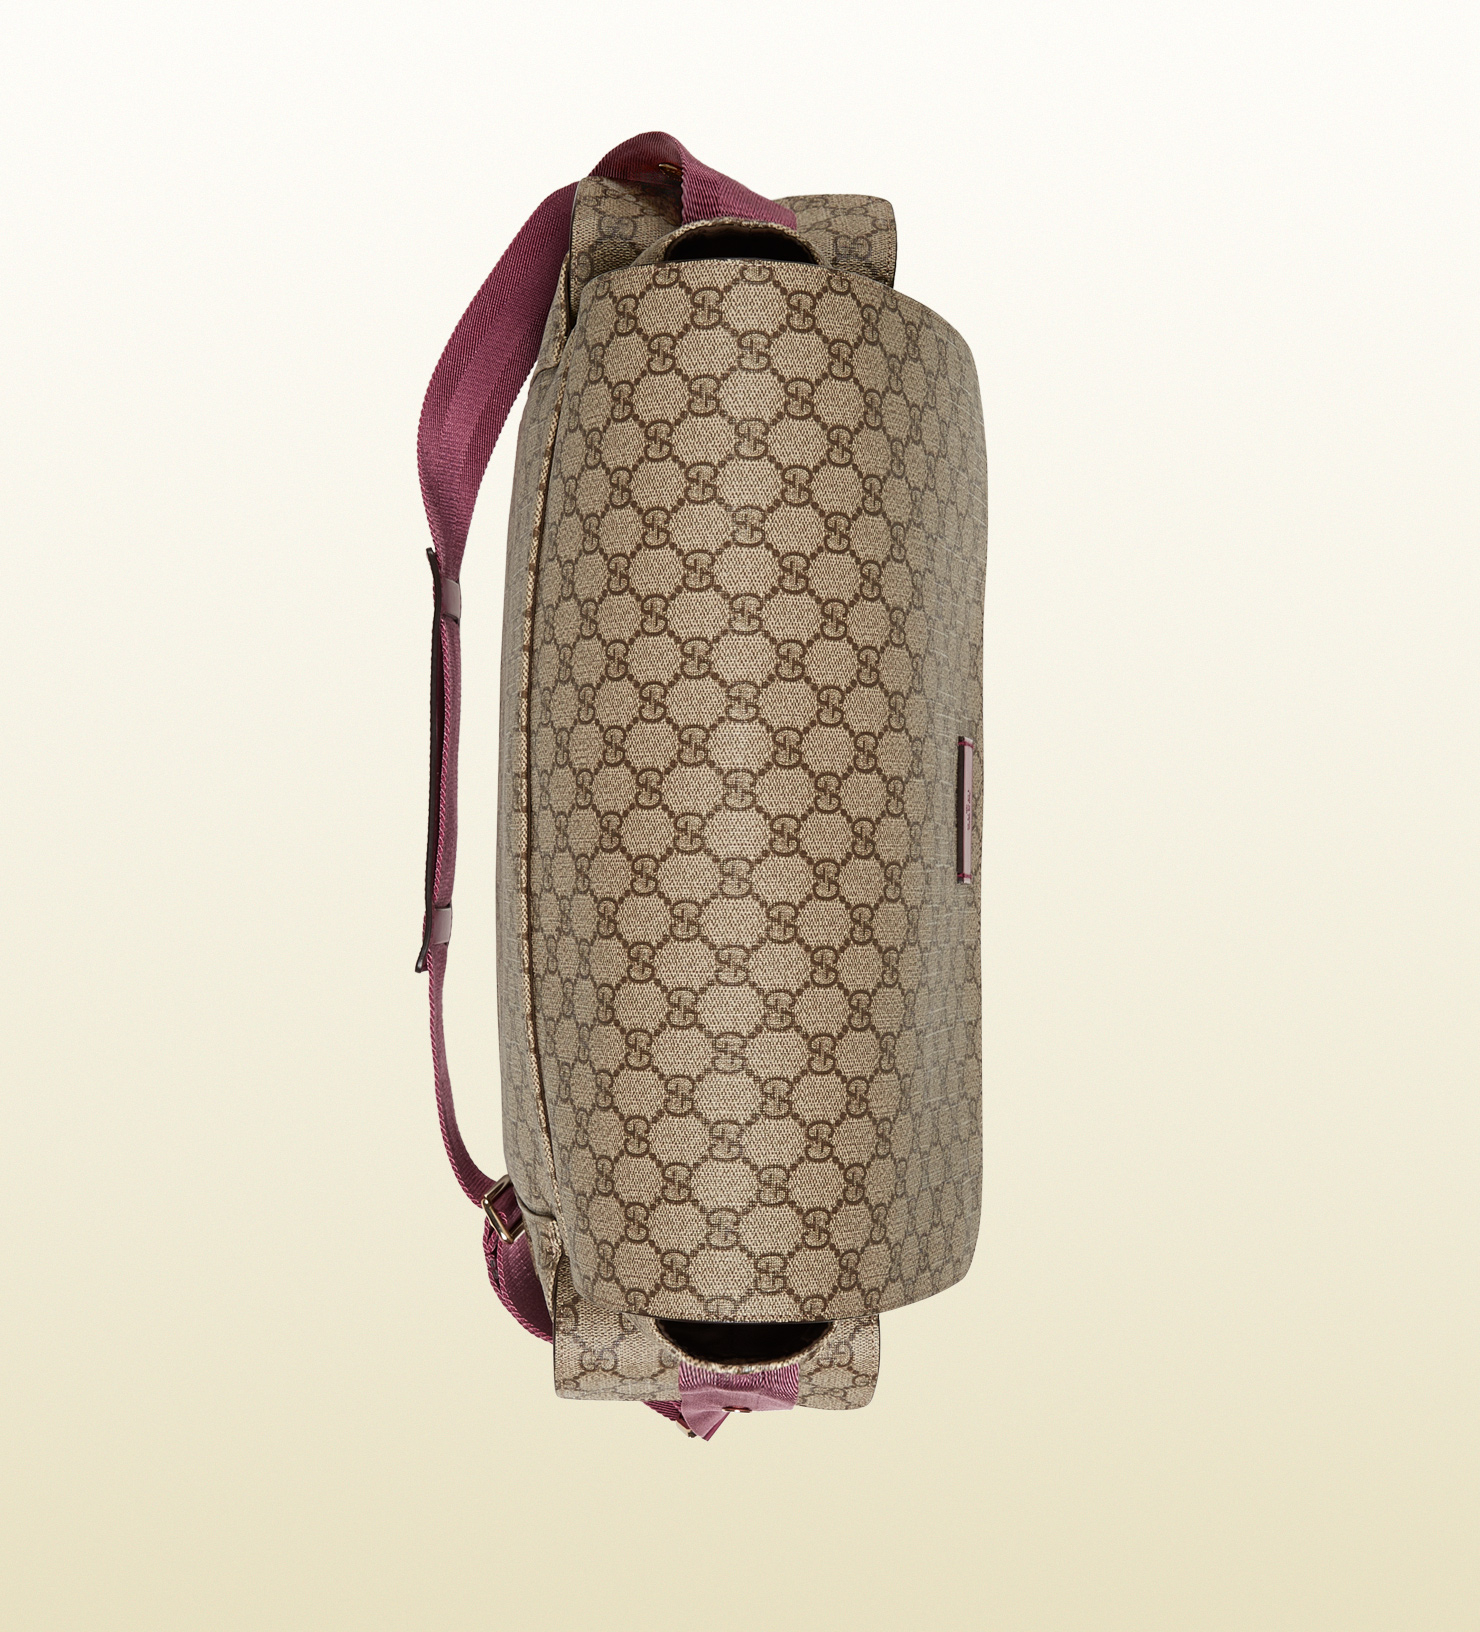 Gucci Gg Supreme Canvas Diaper Bag in Rose (Pink) - Lyst